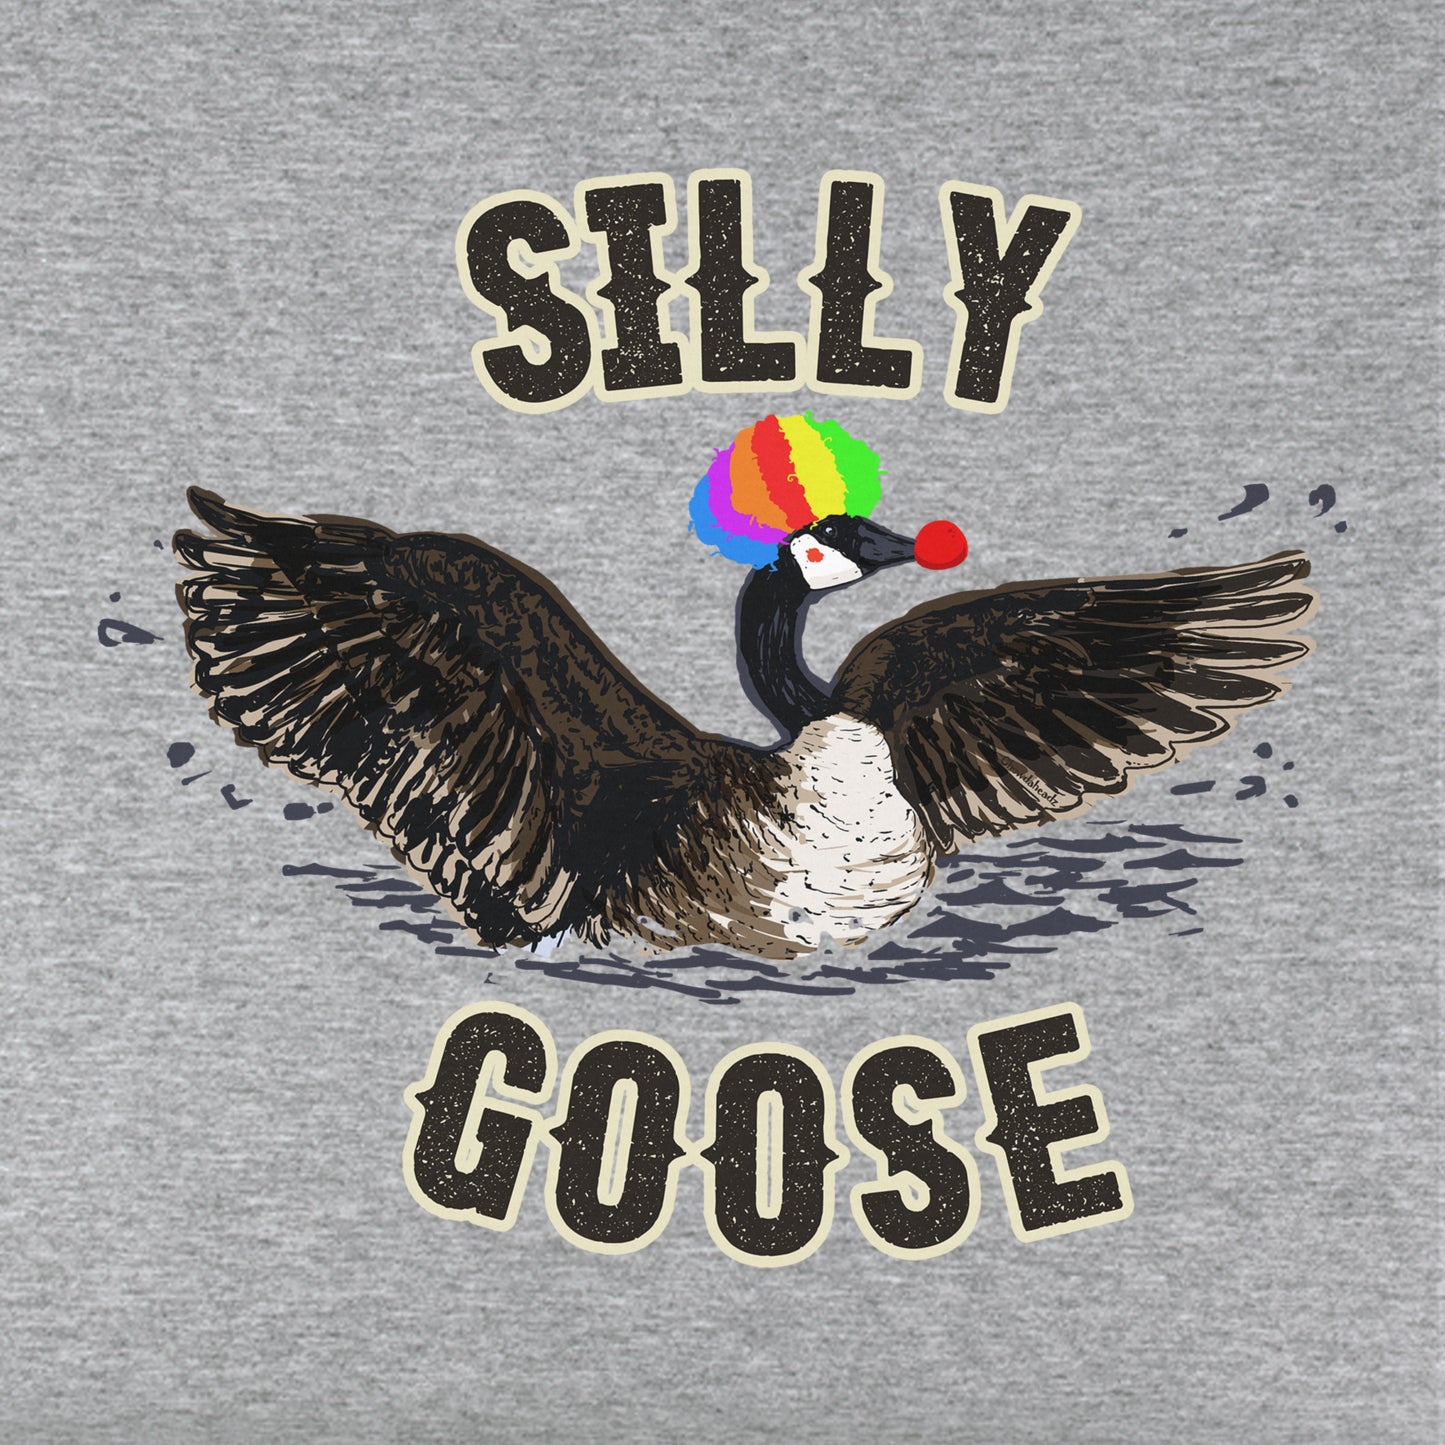 Silly Goose Youth Hoodie - Chowdaheadz